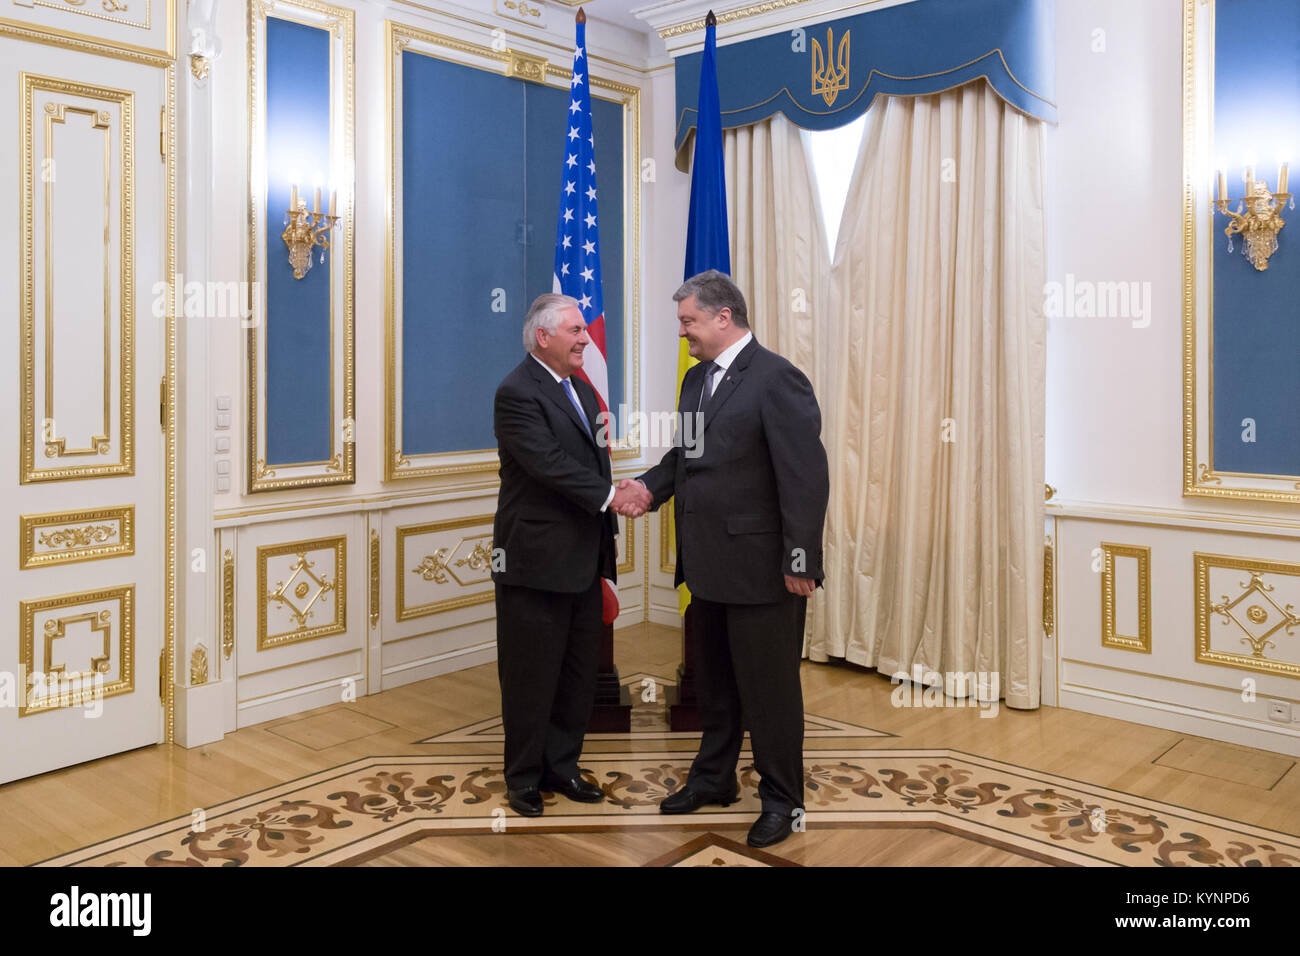 U.S. Secretary of State Rex Tillerson greets President Petro Poroshenko before their bilateral meeting in Kyiv, Ukraine, on July 9, 2017. Secretary Tillerson Meets President Poroshenko 35689050791 o Stock Photo